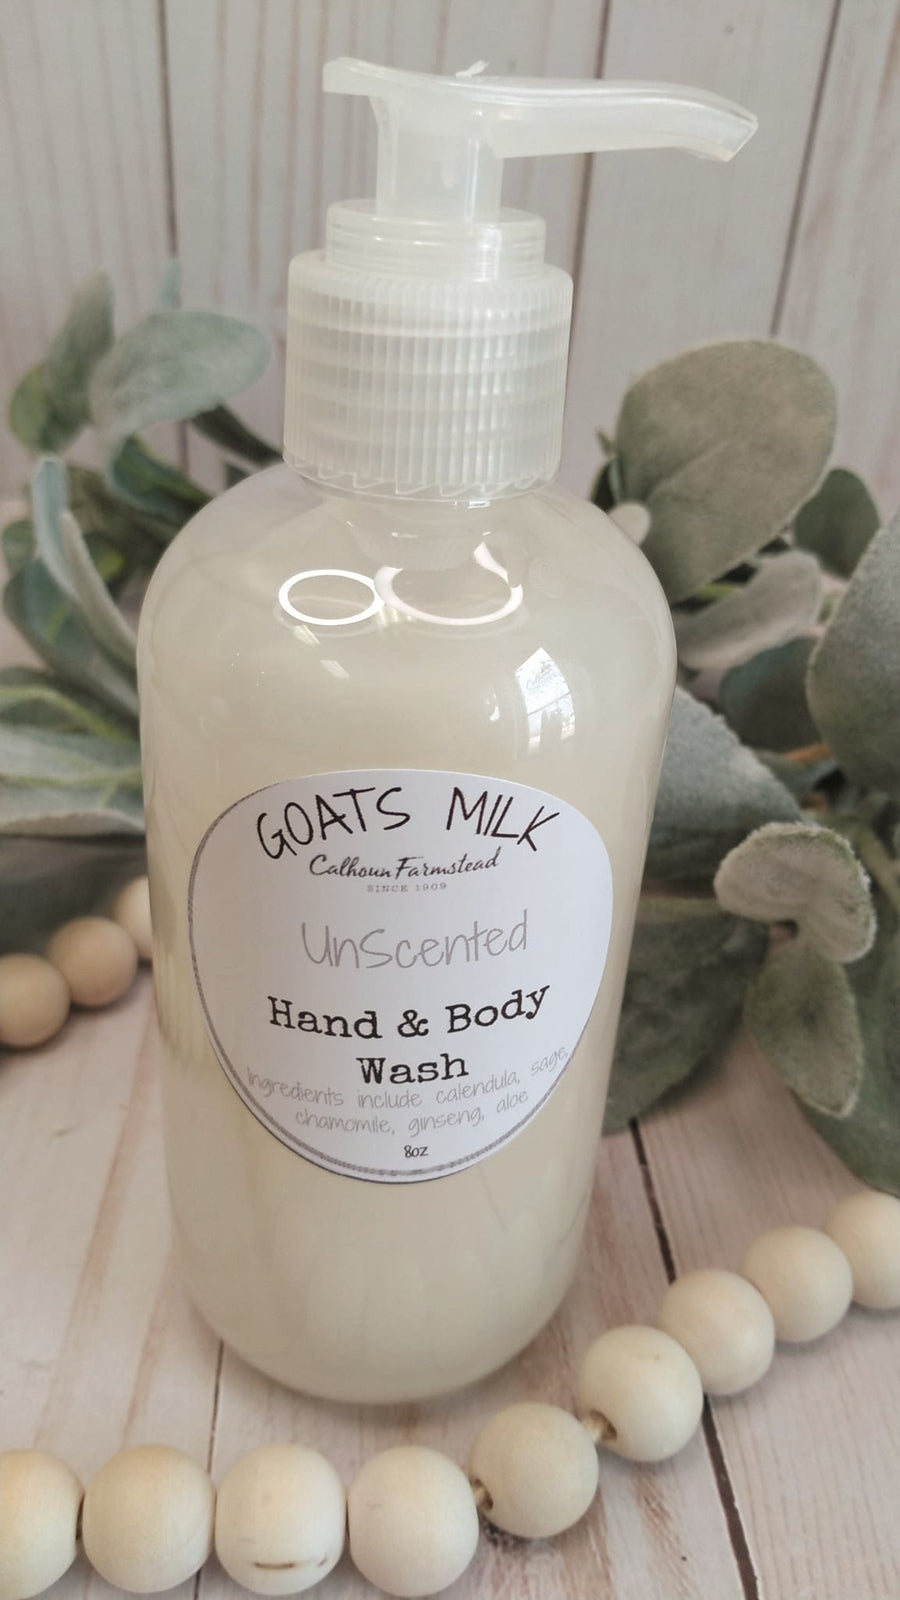 Goats Milk Hand & Body Wash